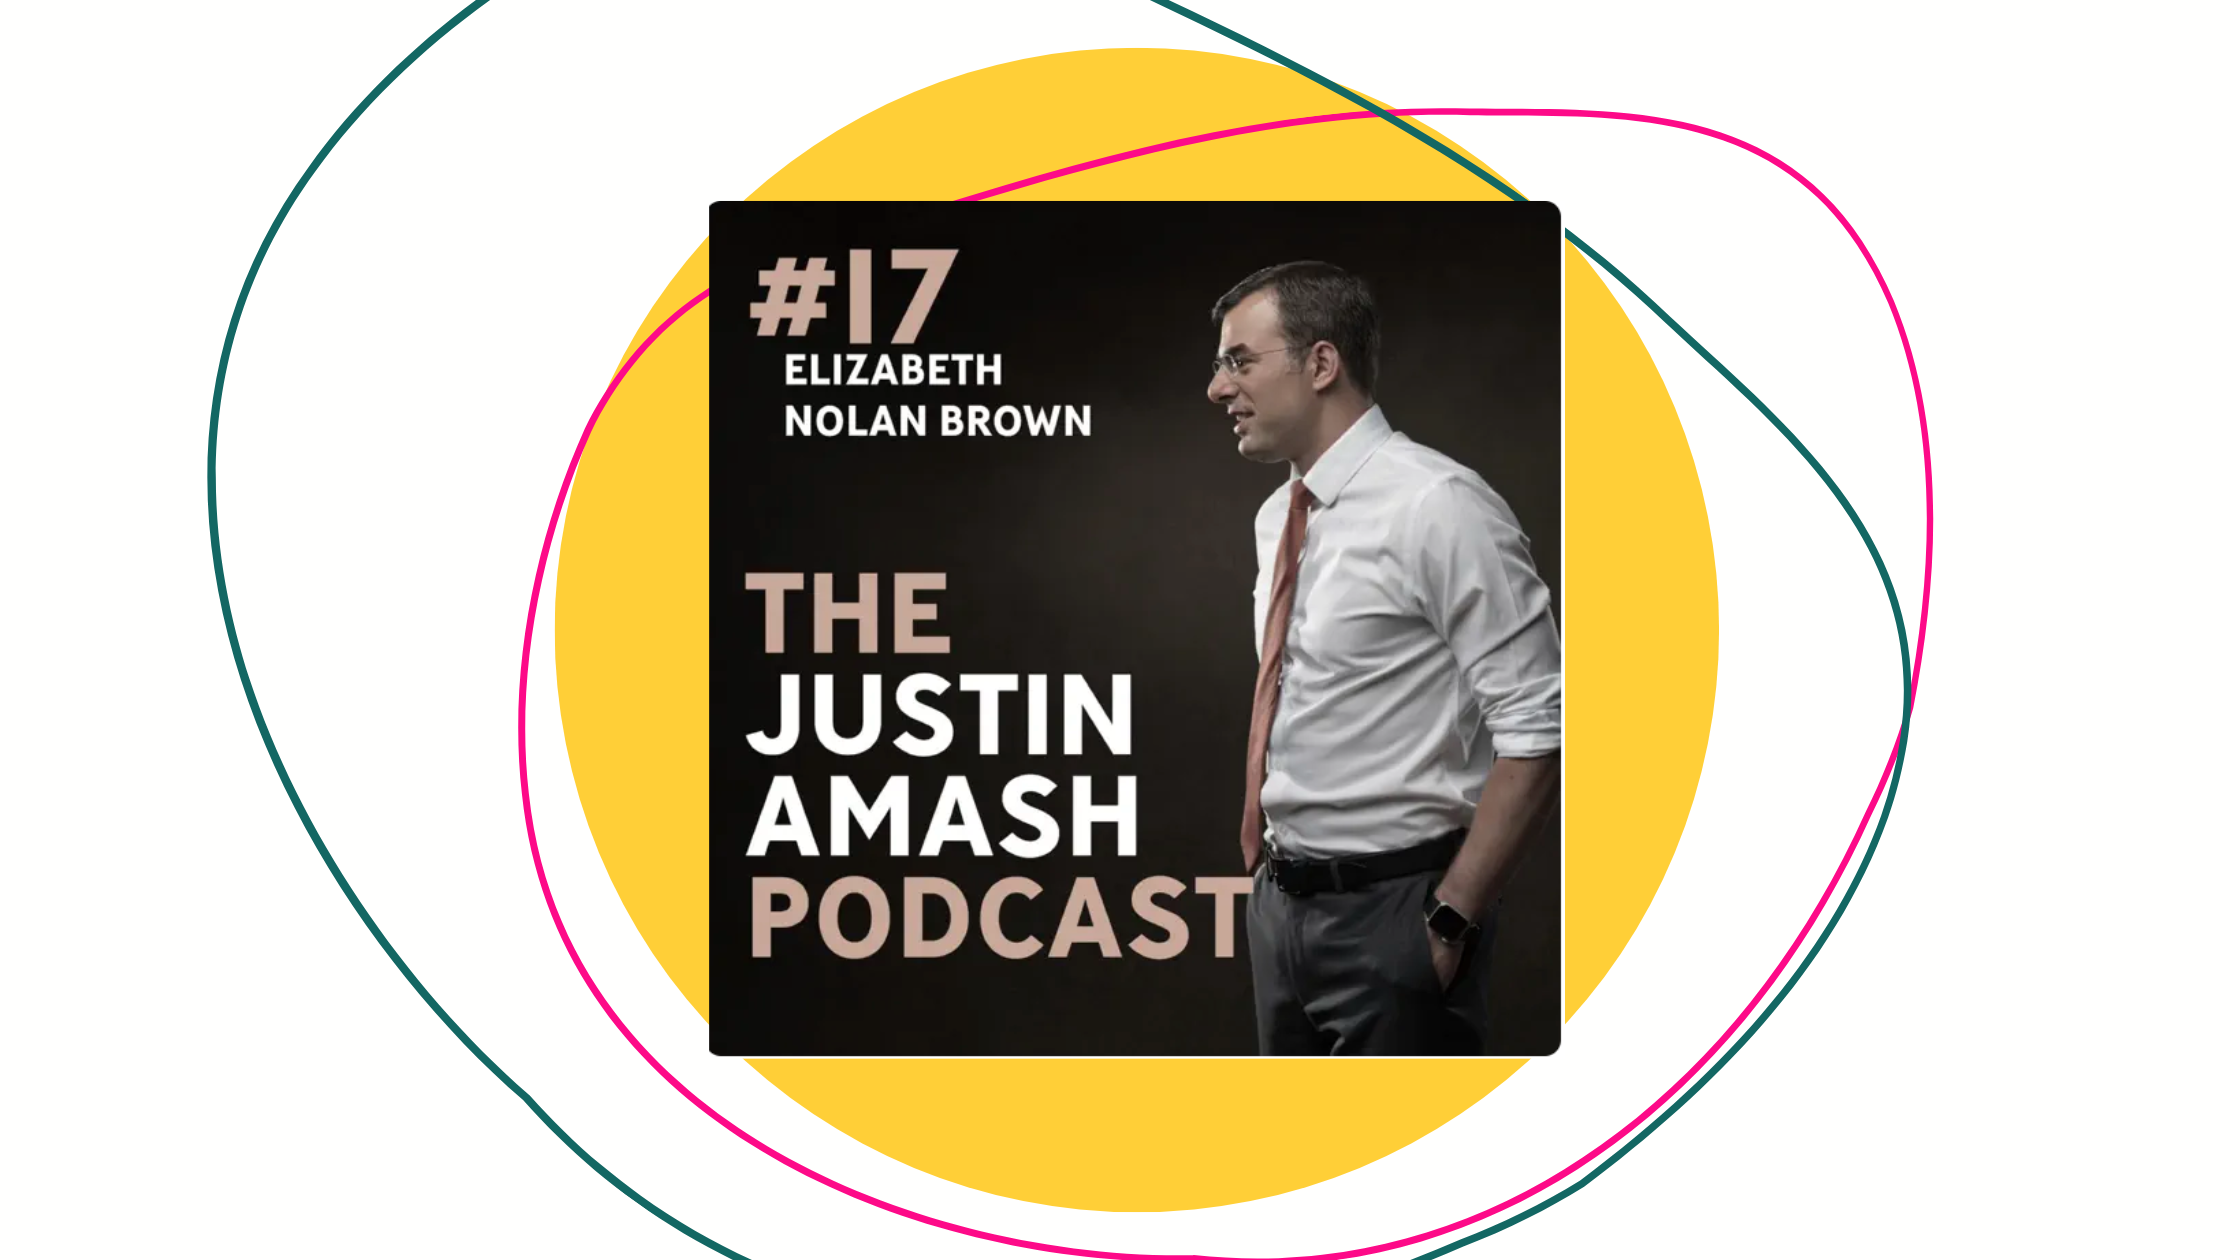 The Justin Amash Podcast logo for episode #17 with Elizabeth Nolan Brown